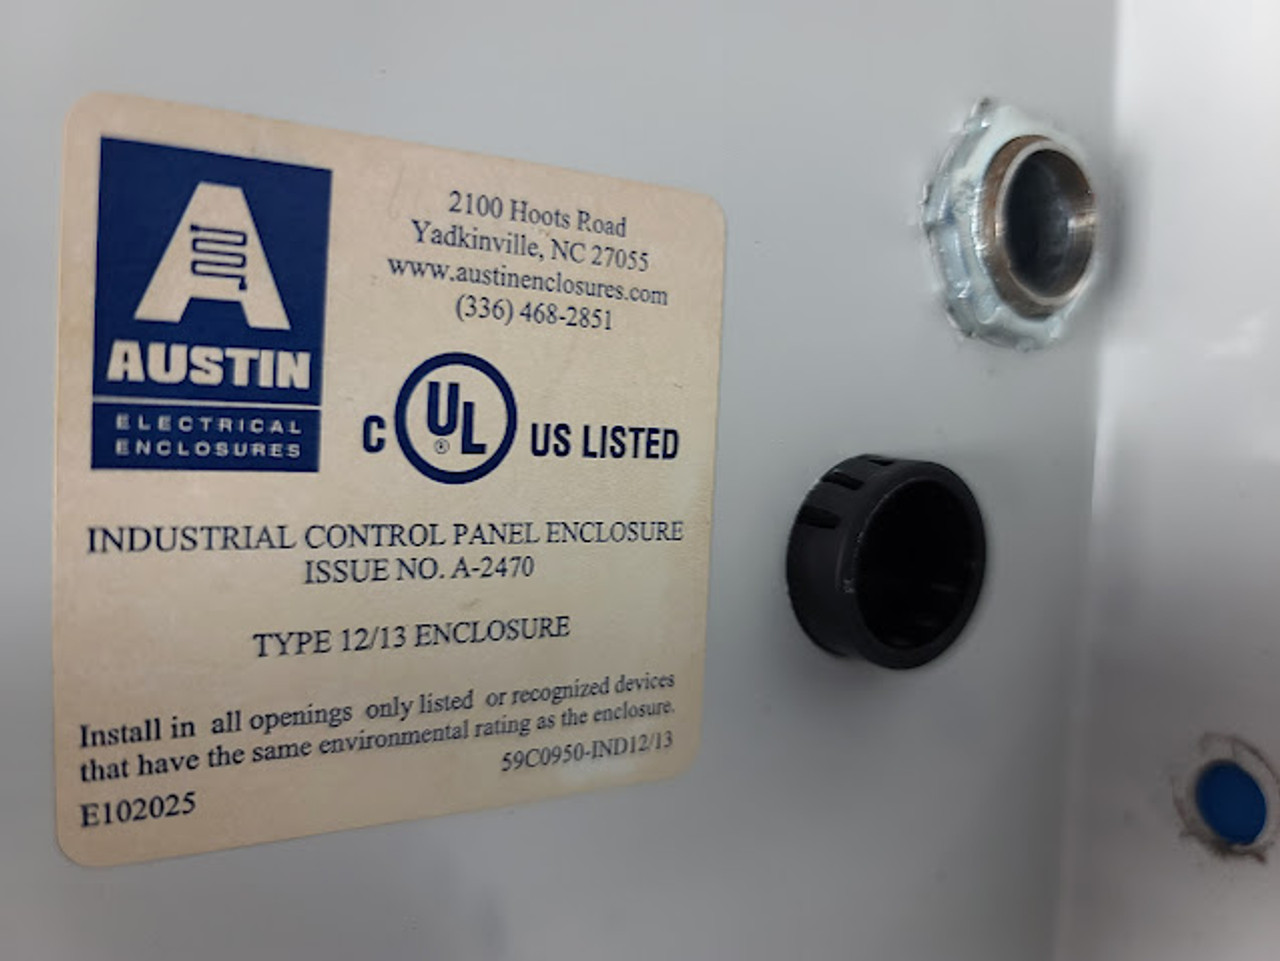 Austin Electrical Enclosure 14.5 x 12.5 x 7.5" Type 12/13 Enclosure A-2470